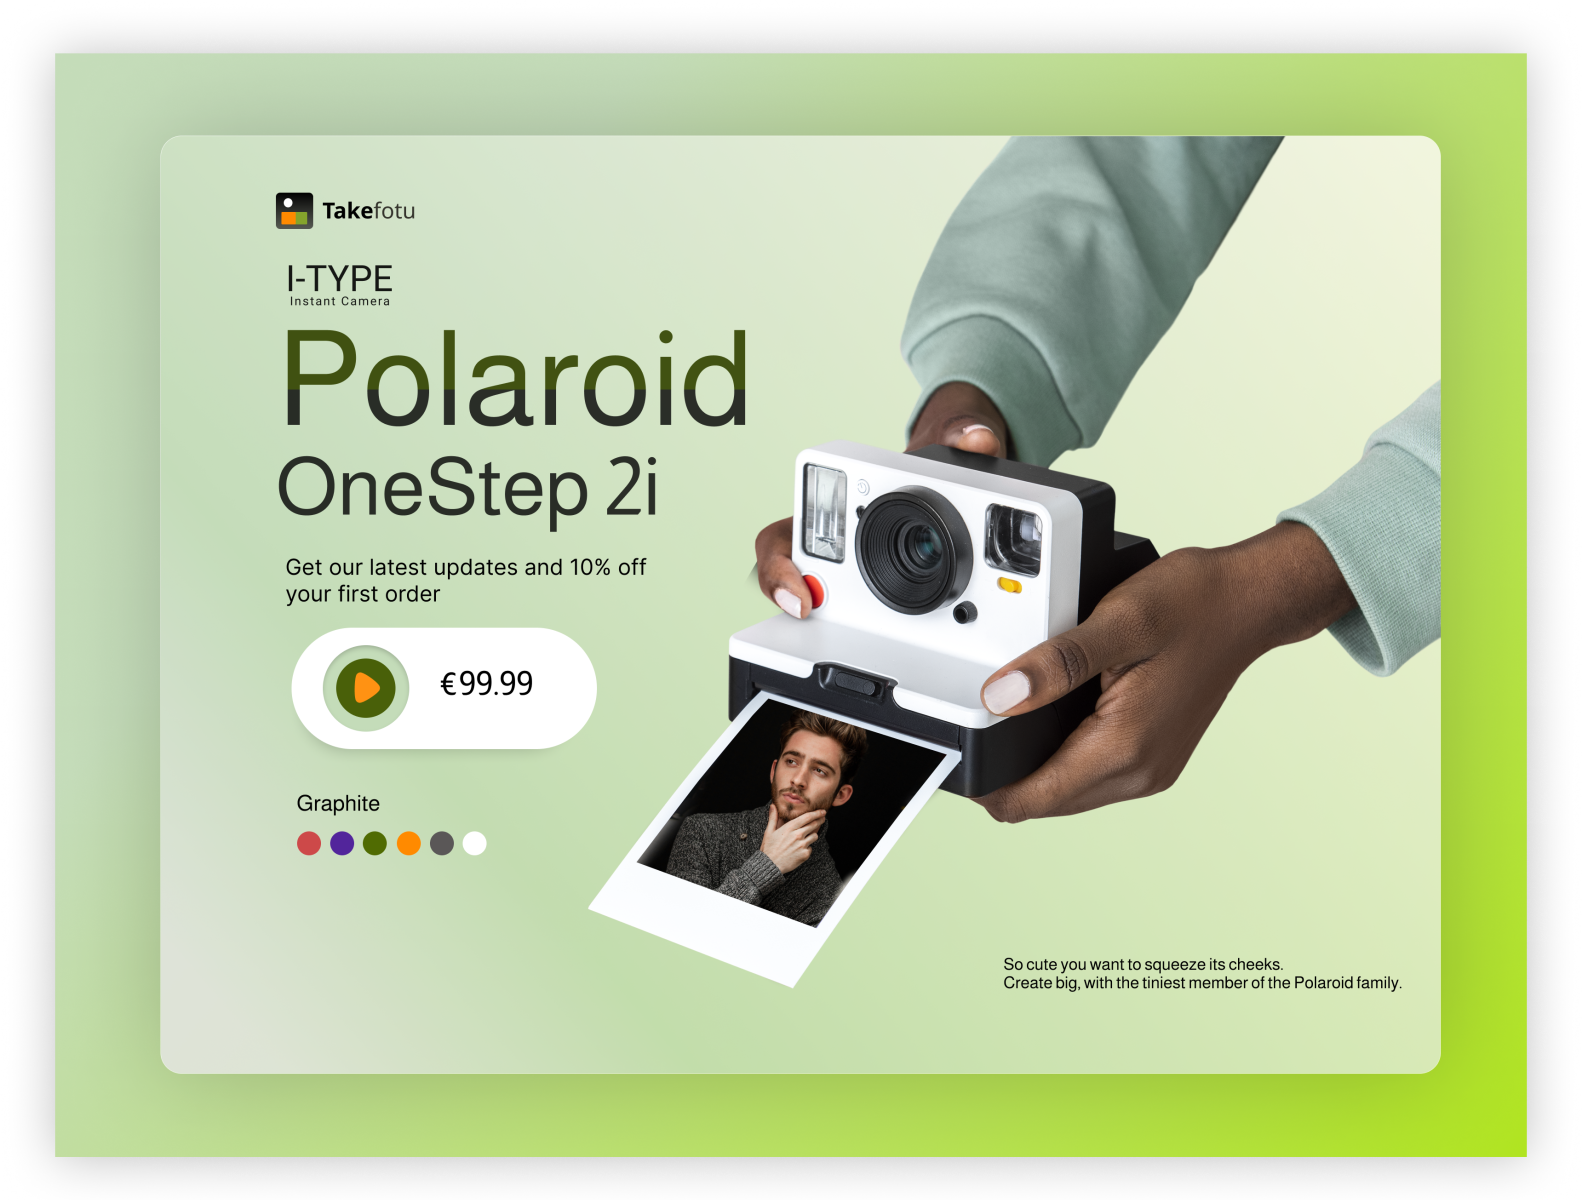 Polaroid Onestep 2i Camera New Web Ui by Vivek Kumar on Dribbble